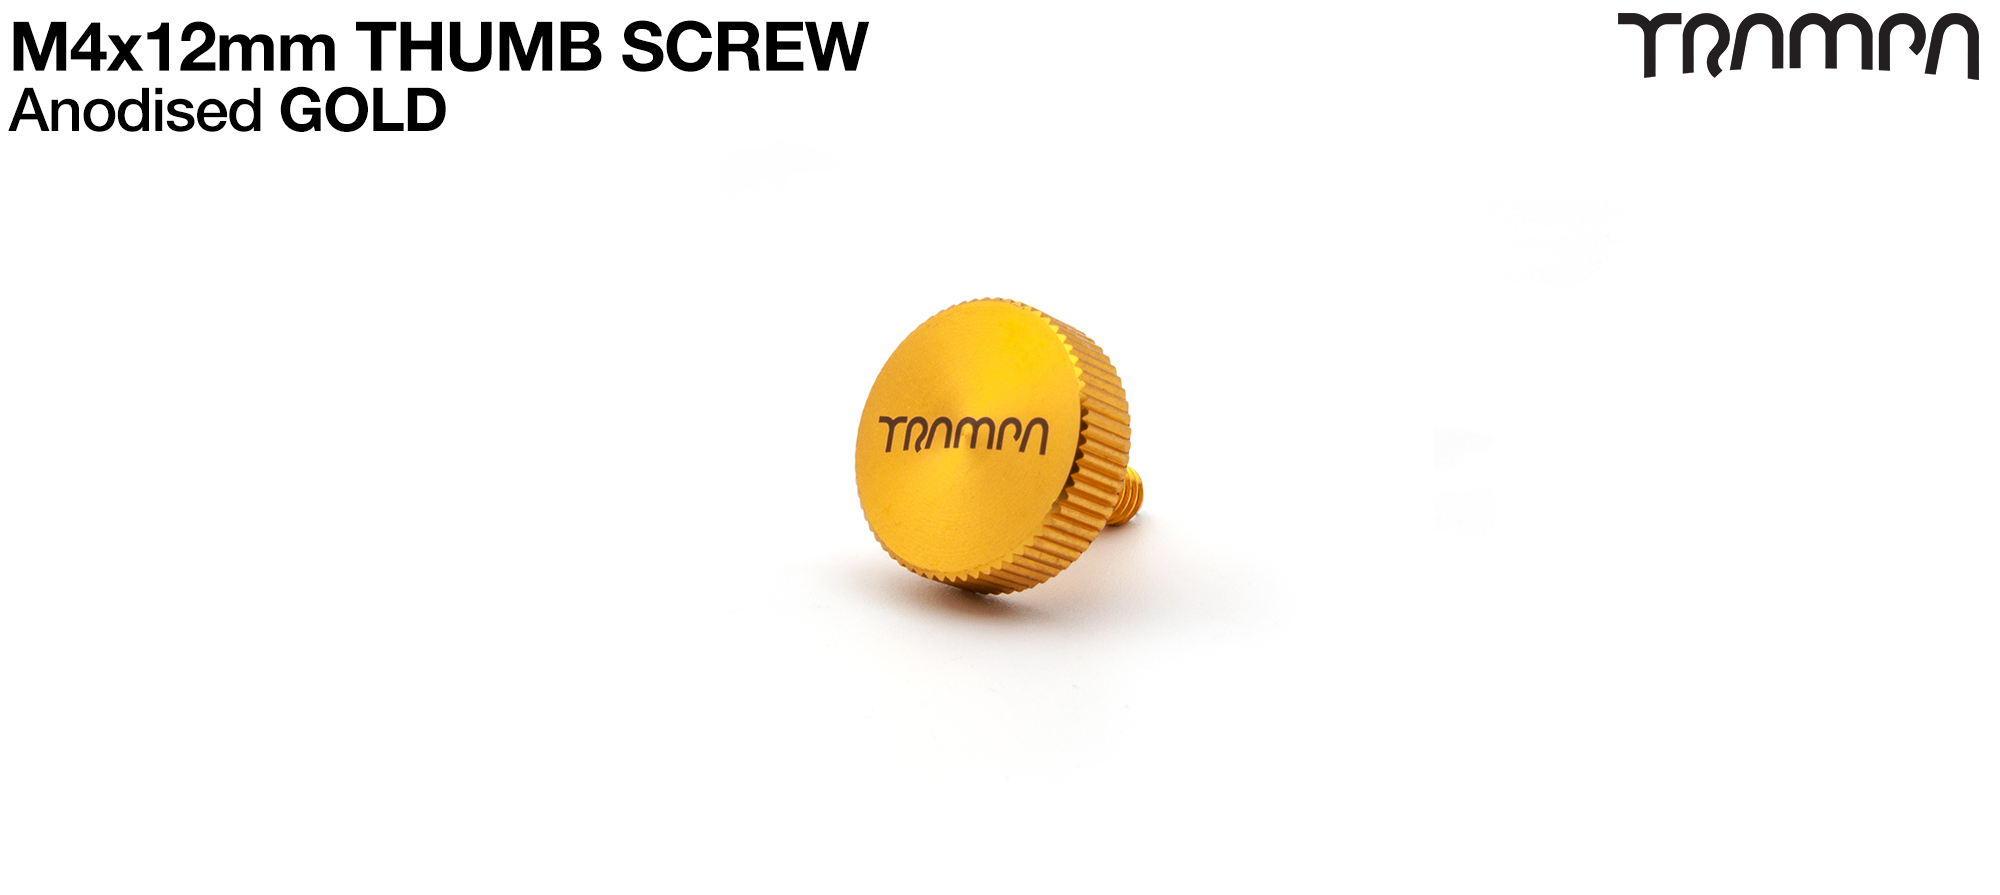 Thumb Screw - GOLD 